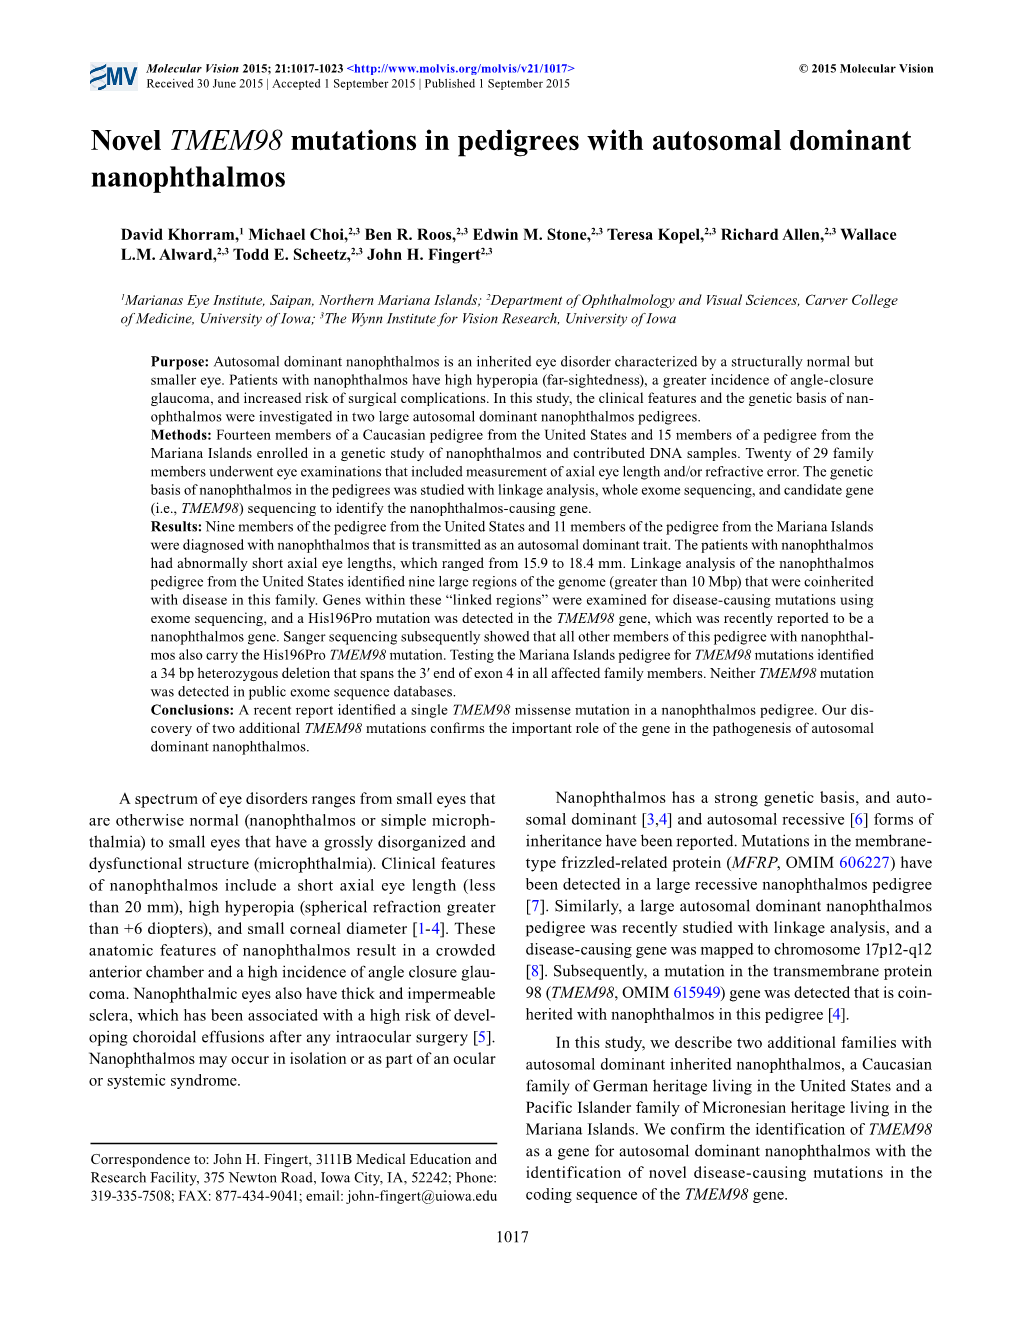 Novel TMEM98 Mutations in Pedigrees with Autosomal Dominant Nanophthalmos